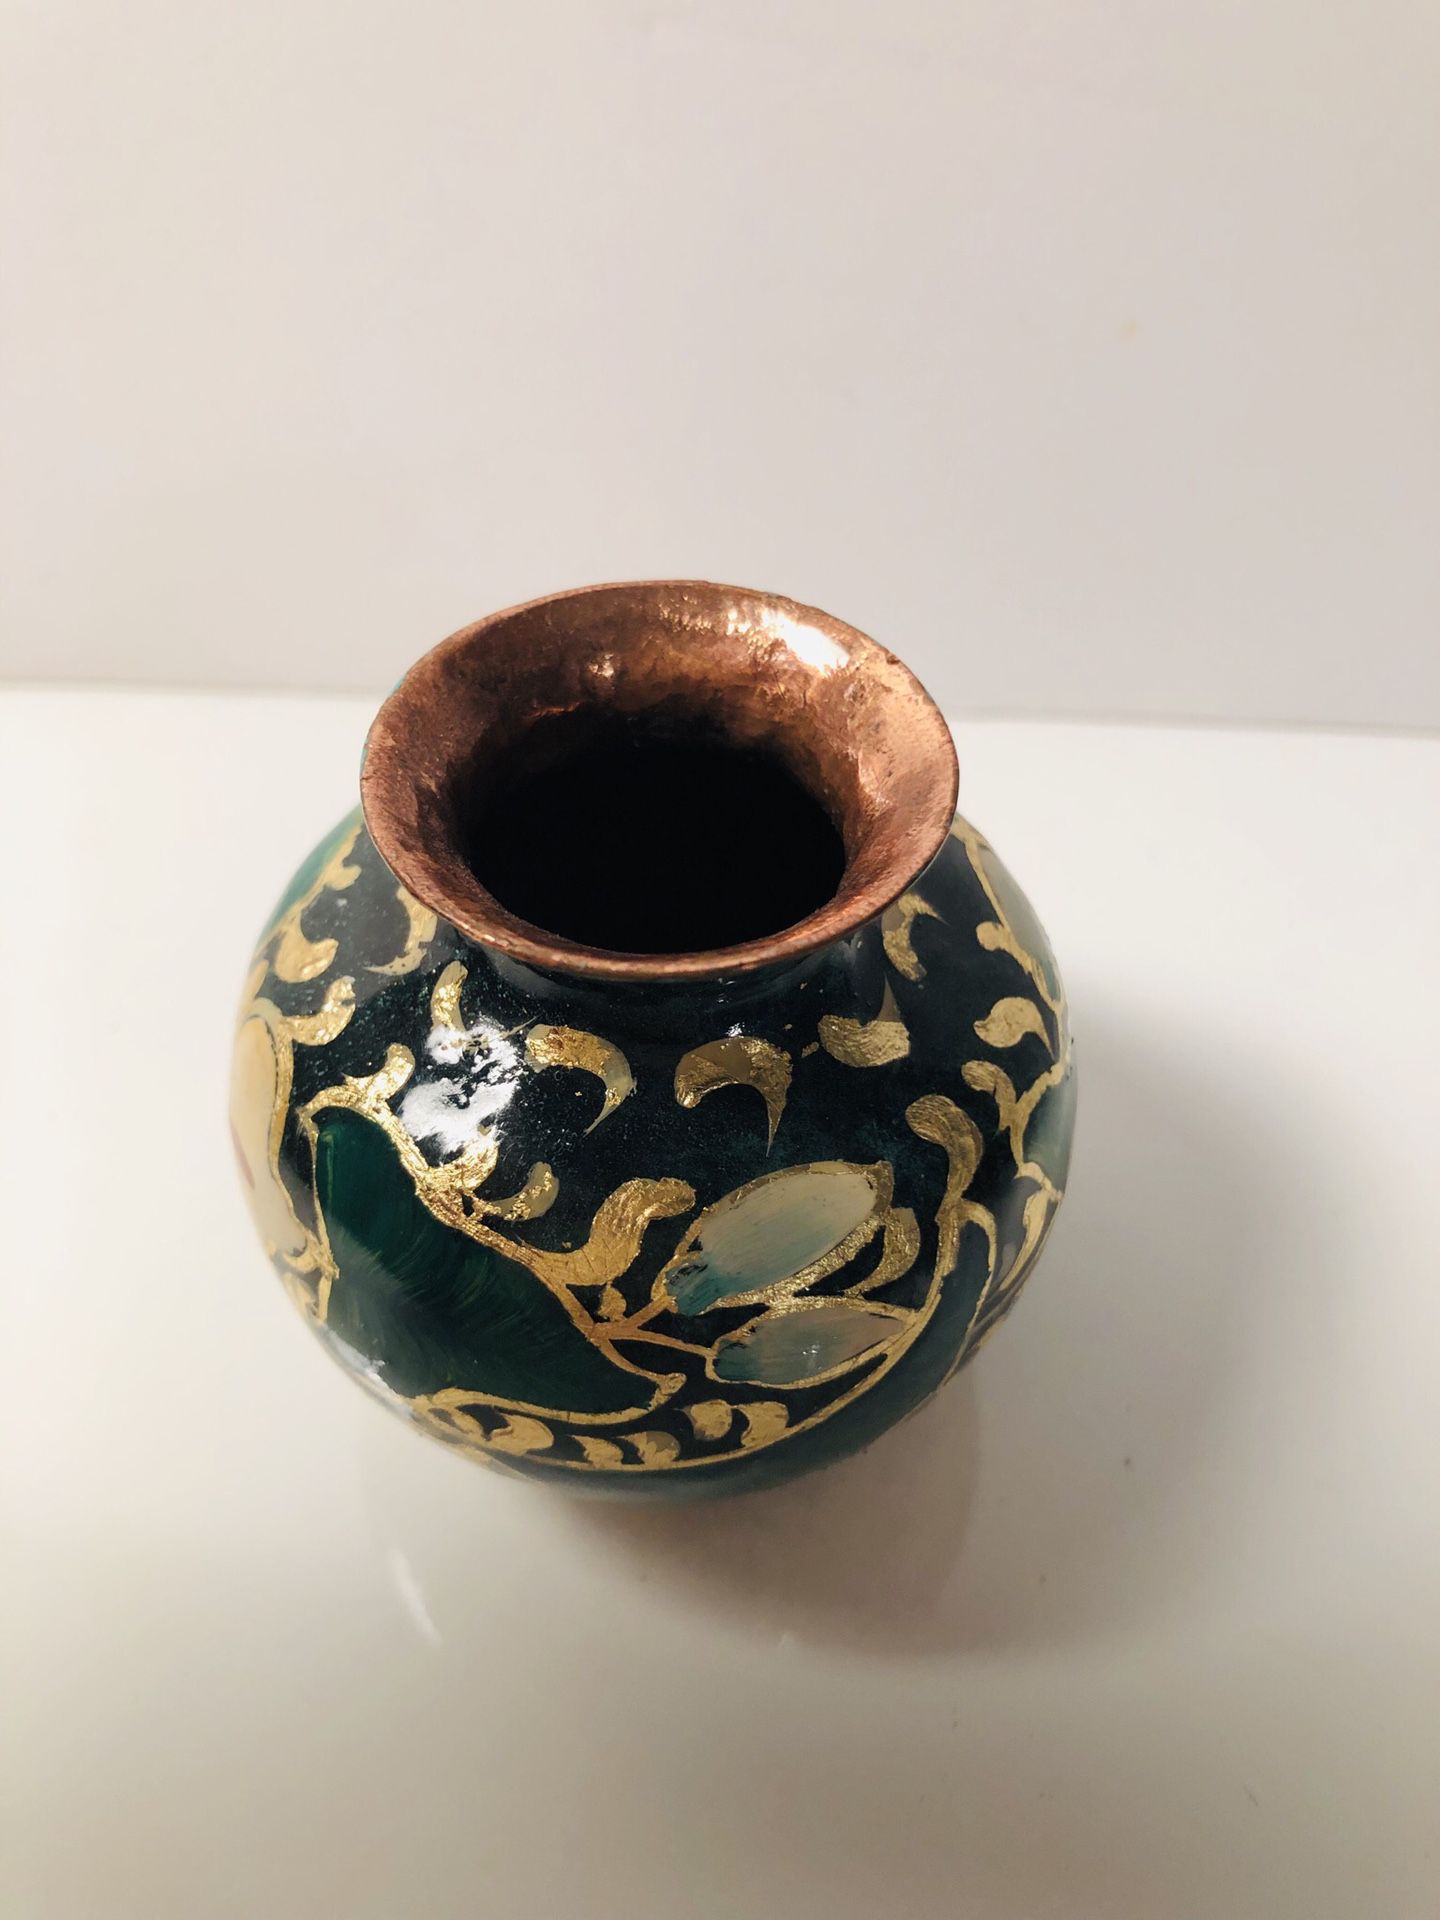 Tiny Copper Interior Decorative Little Vase For Succulents or Decor Rose Gold